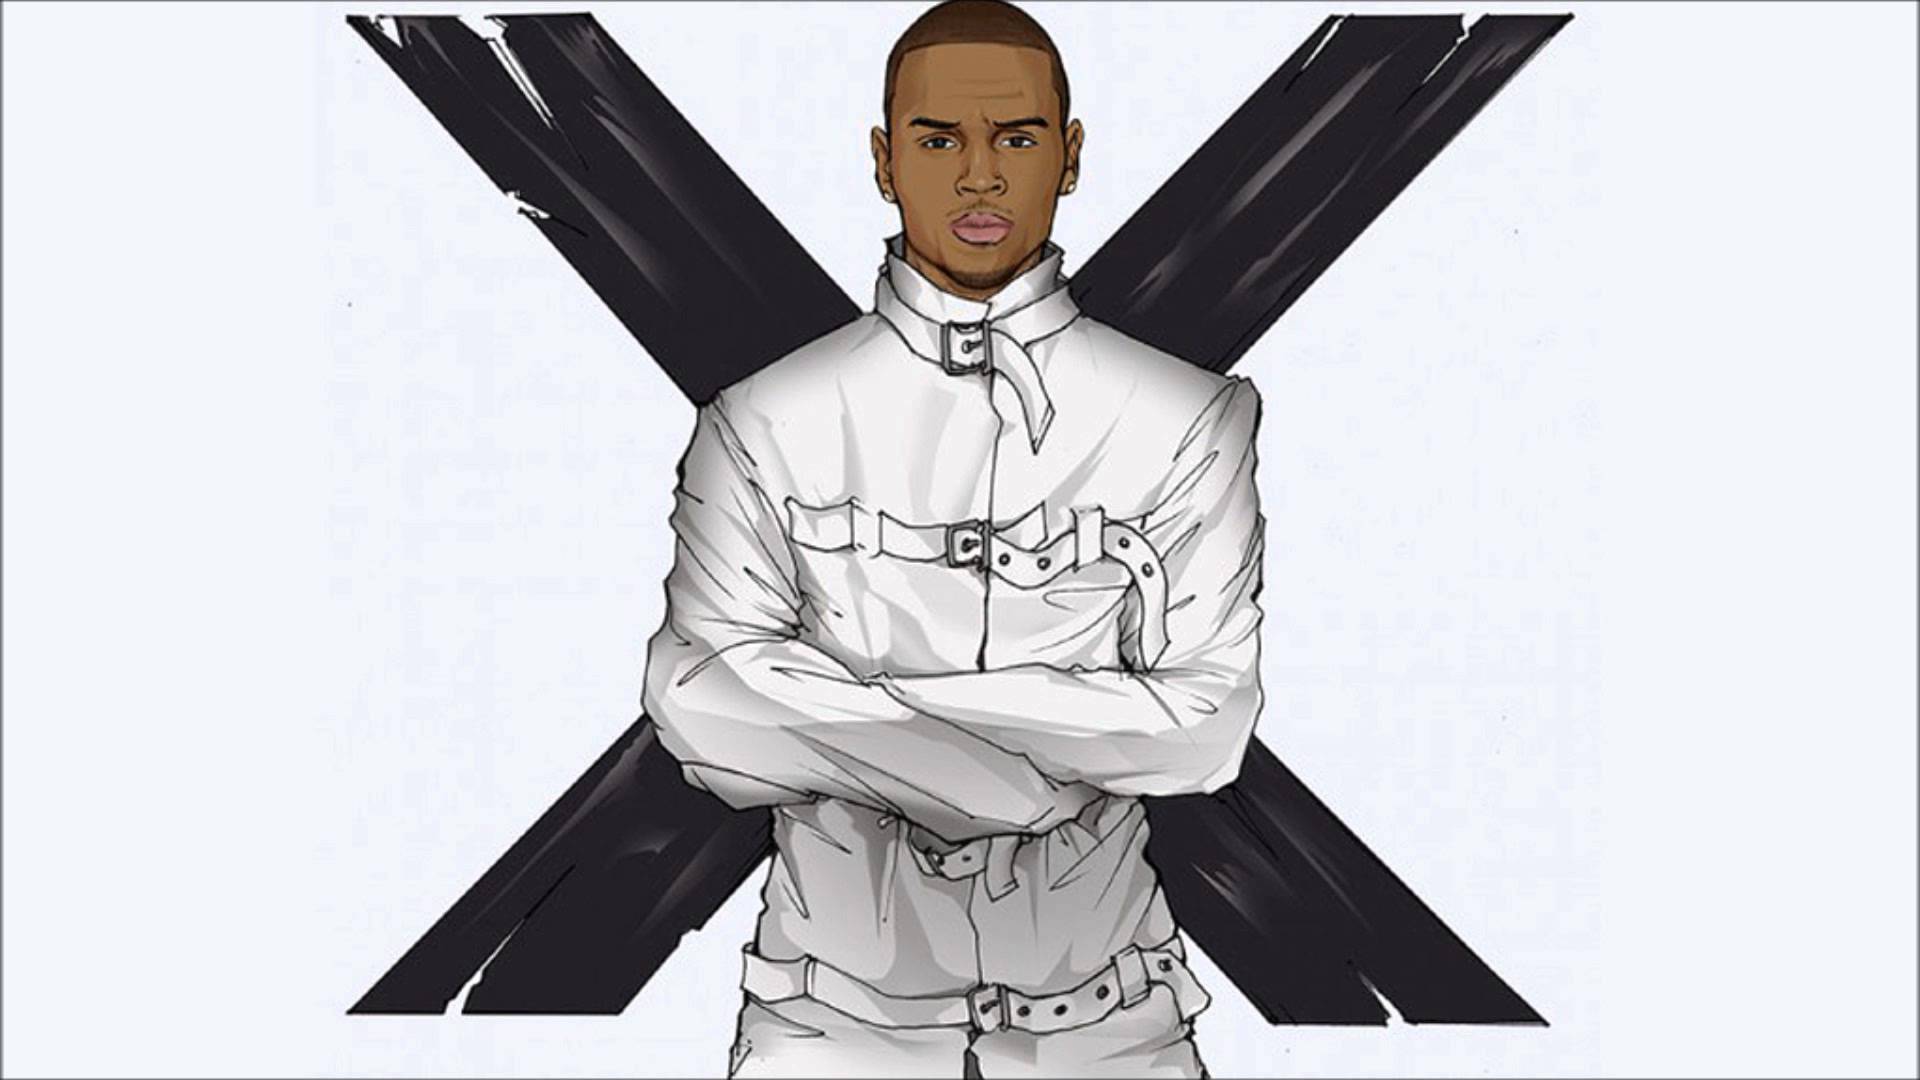 Chris Brown Animated Wallpaper posted .cutewallpaper.org